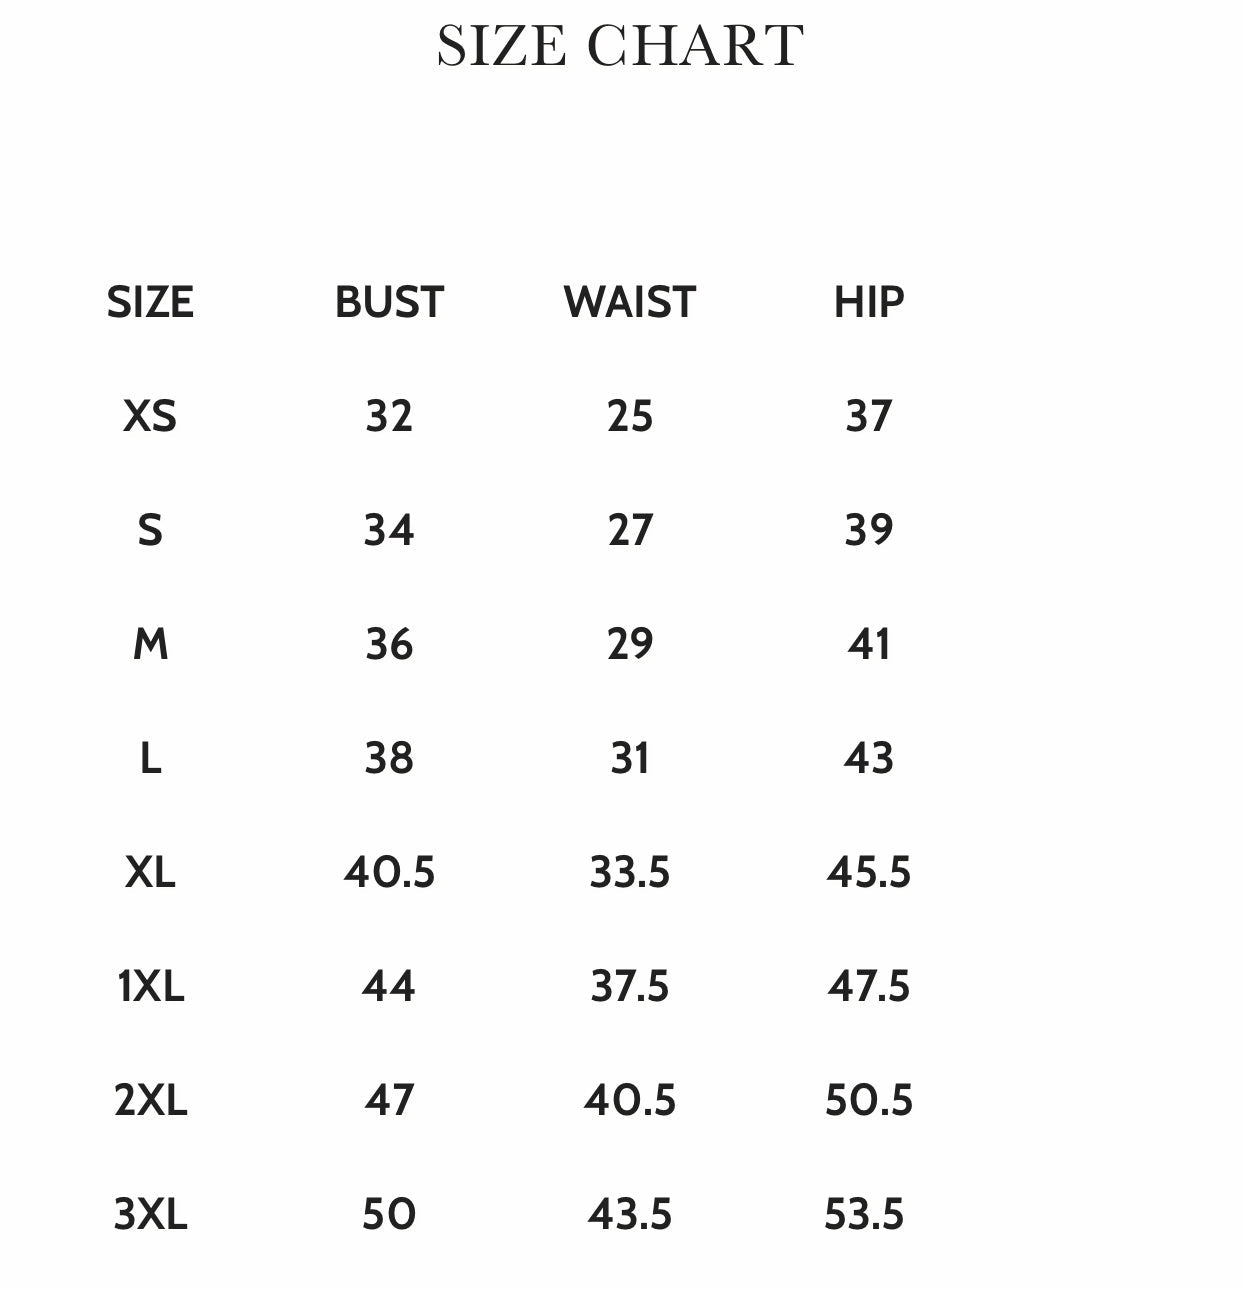 Solid Fuchsia Midi Dress, Sizes Small - Large